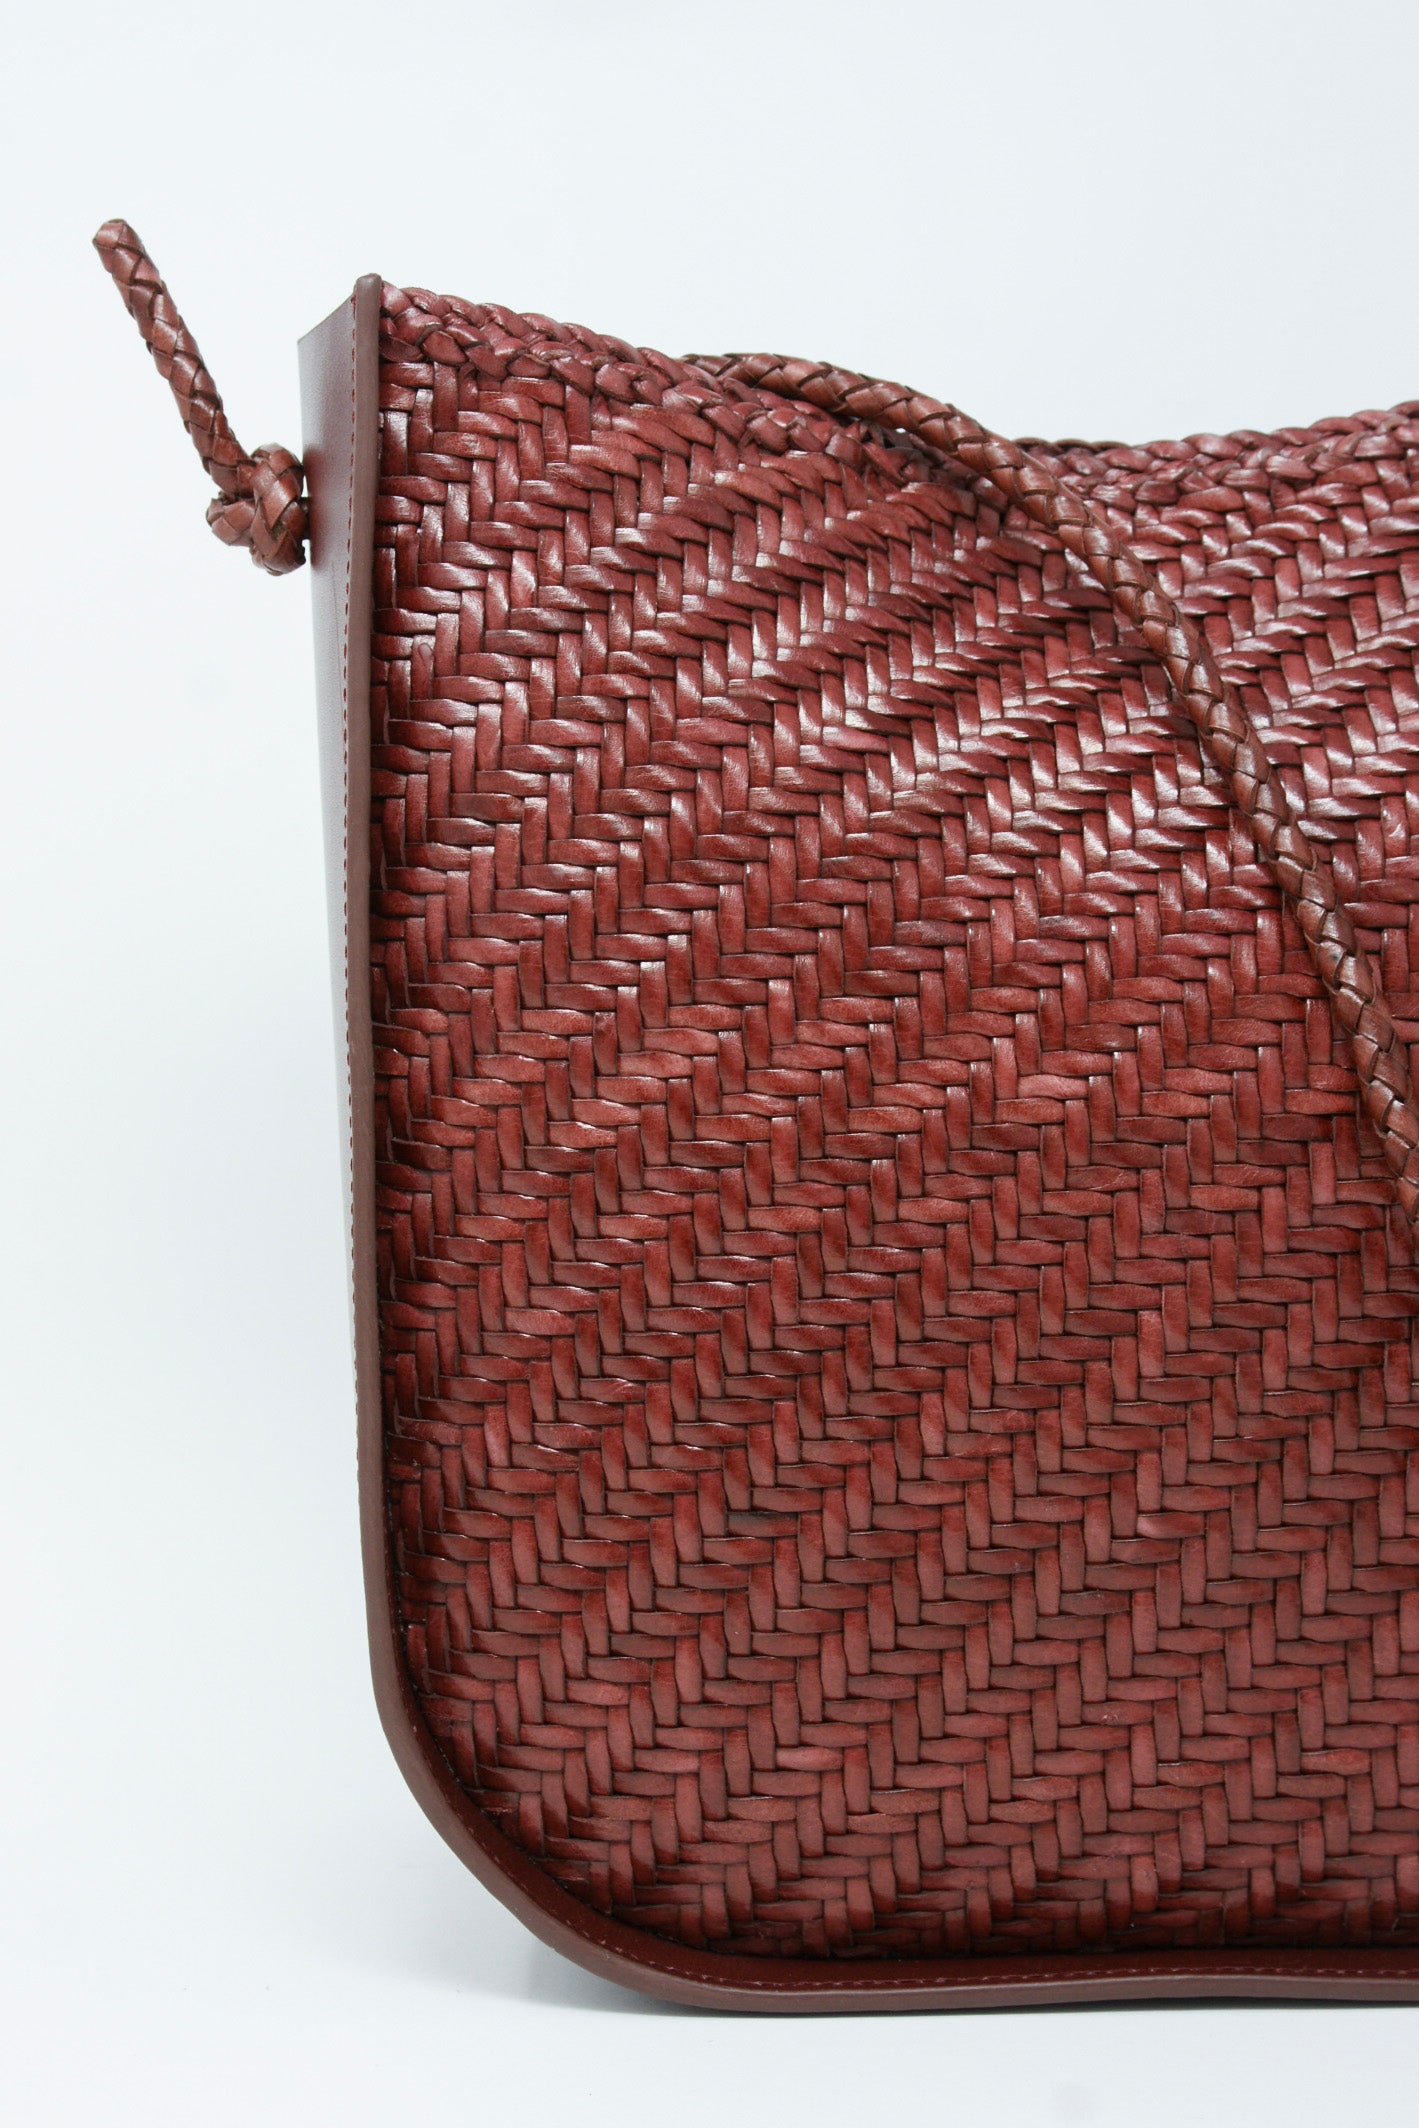 A Dragon Diffusion Wanaka Crossbody Bag in Bordo with a shoulder strap.